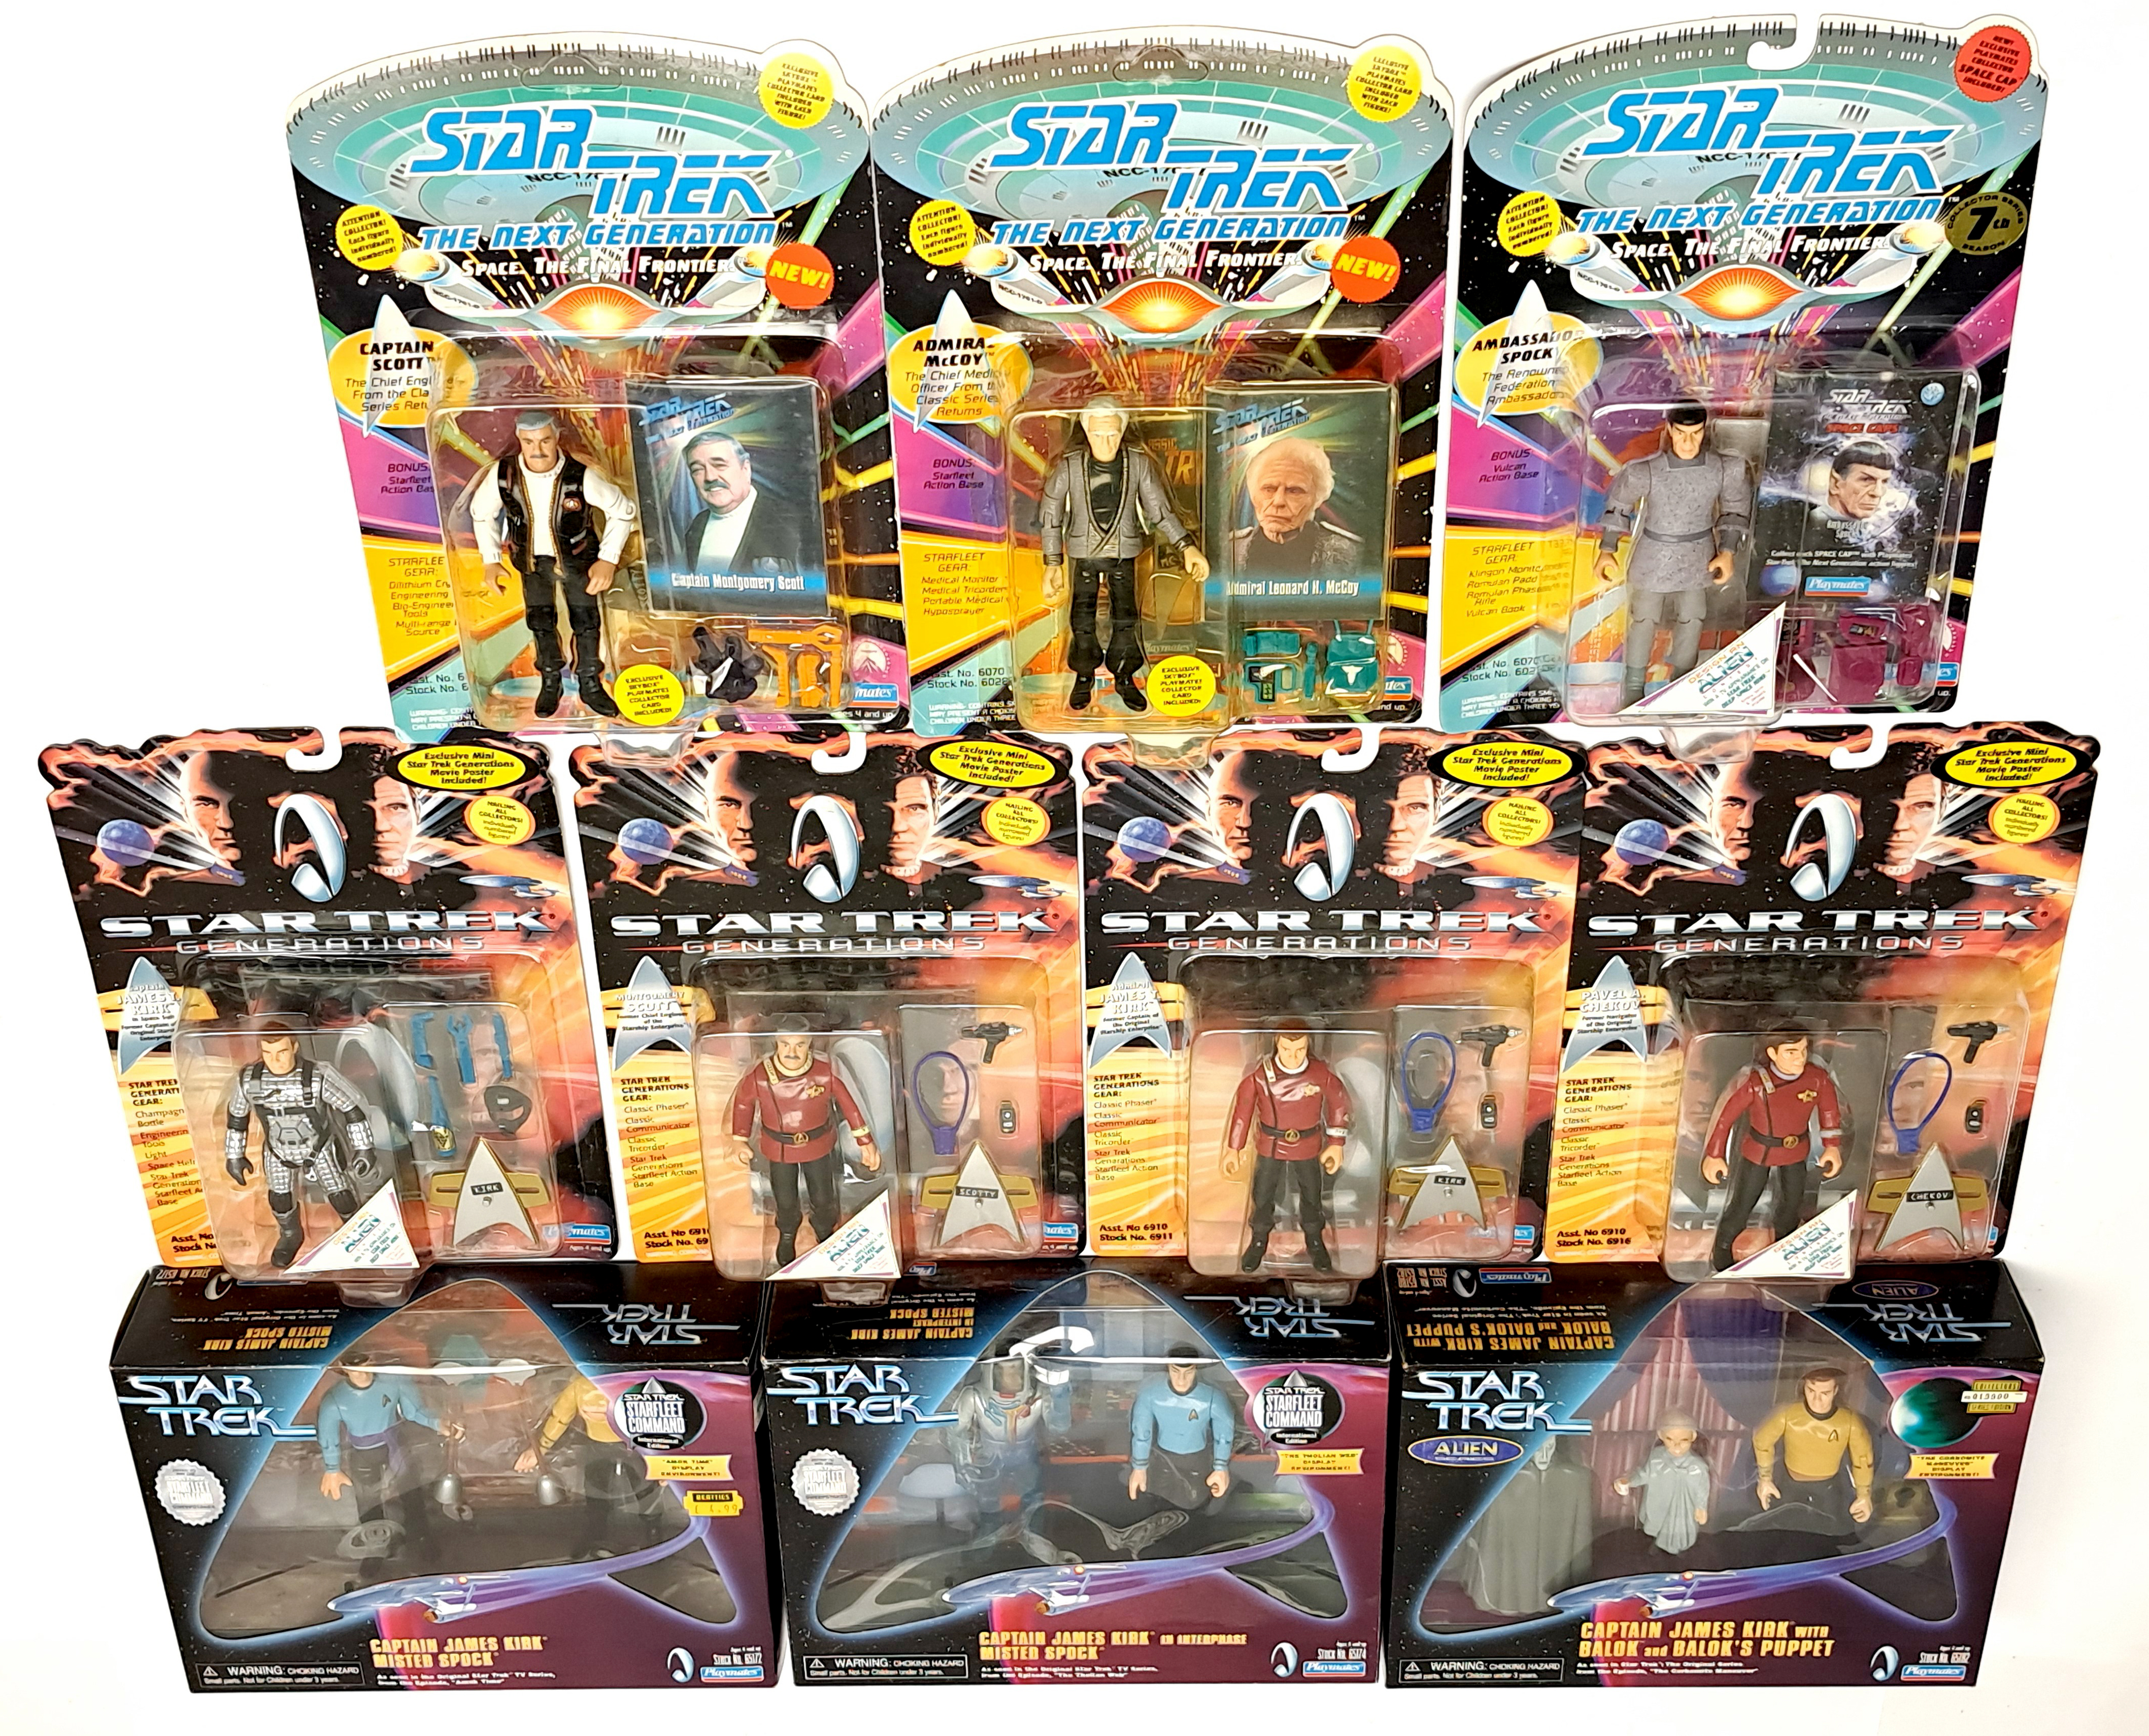 Quantity of Playmates Star Trek action figures & multi-figure packs